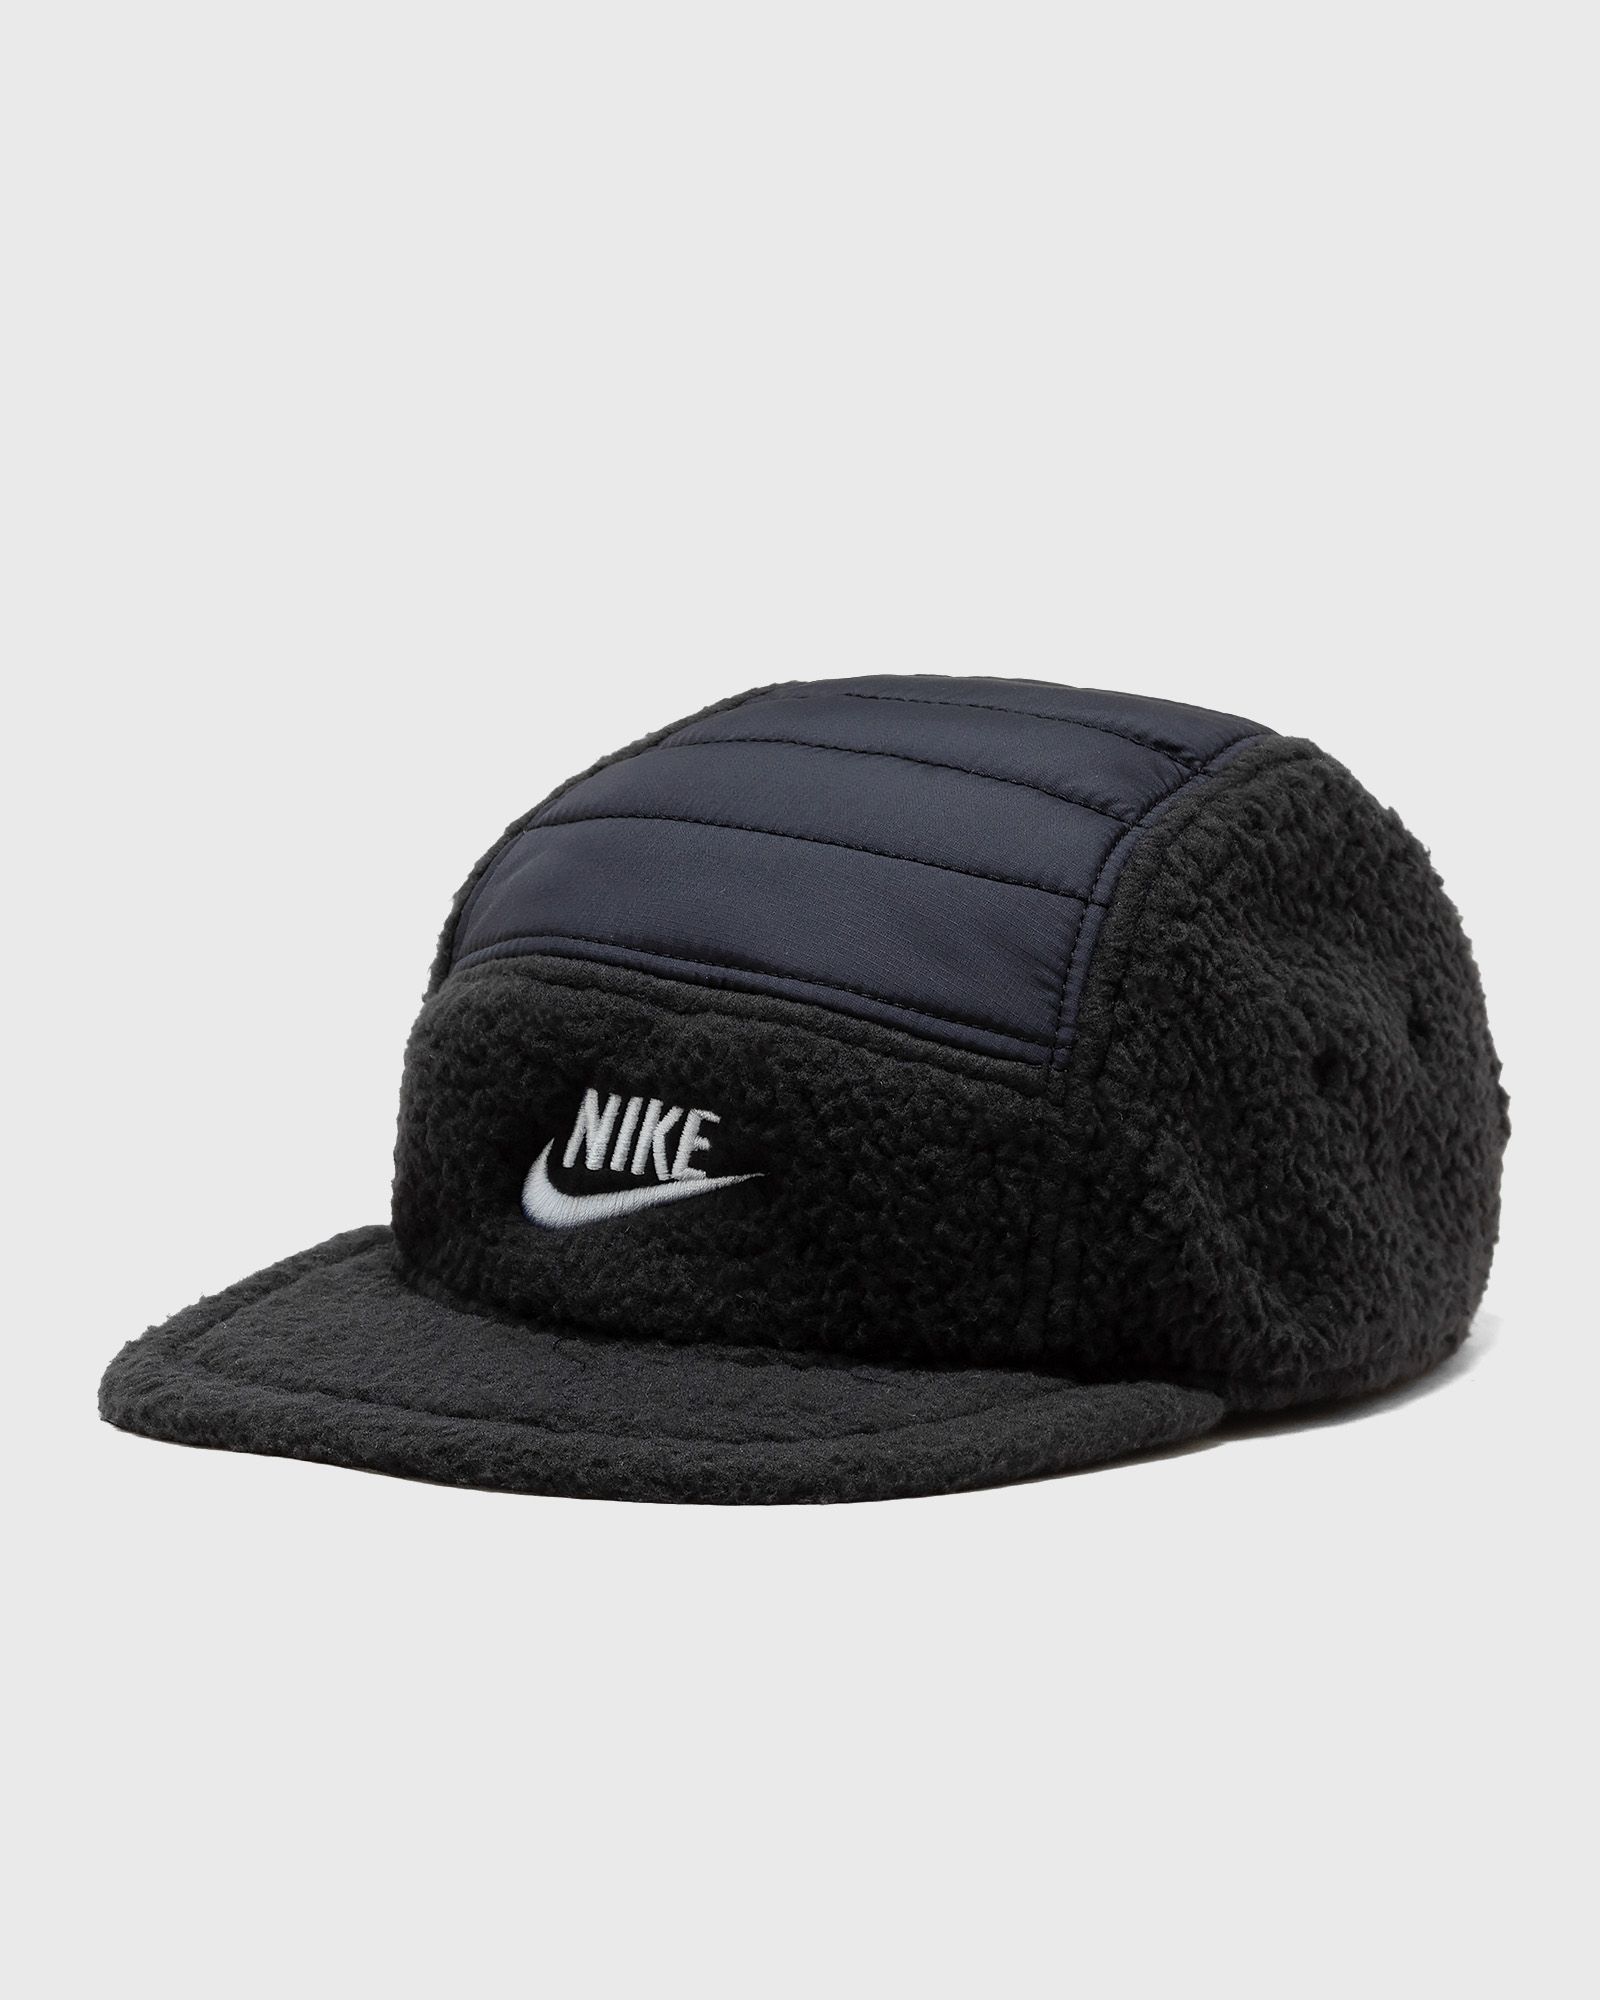 Nike - fly cap unstructured 5-panel flat bill hat men caps black in größe:m/l